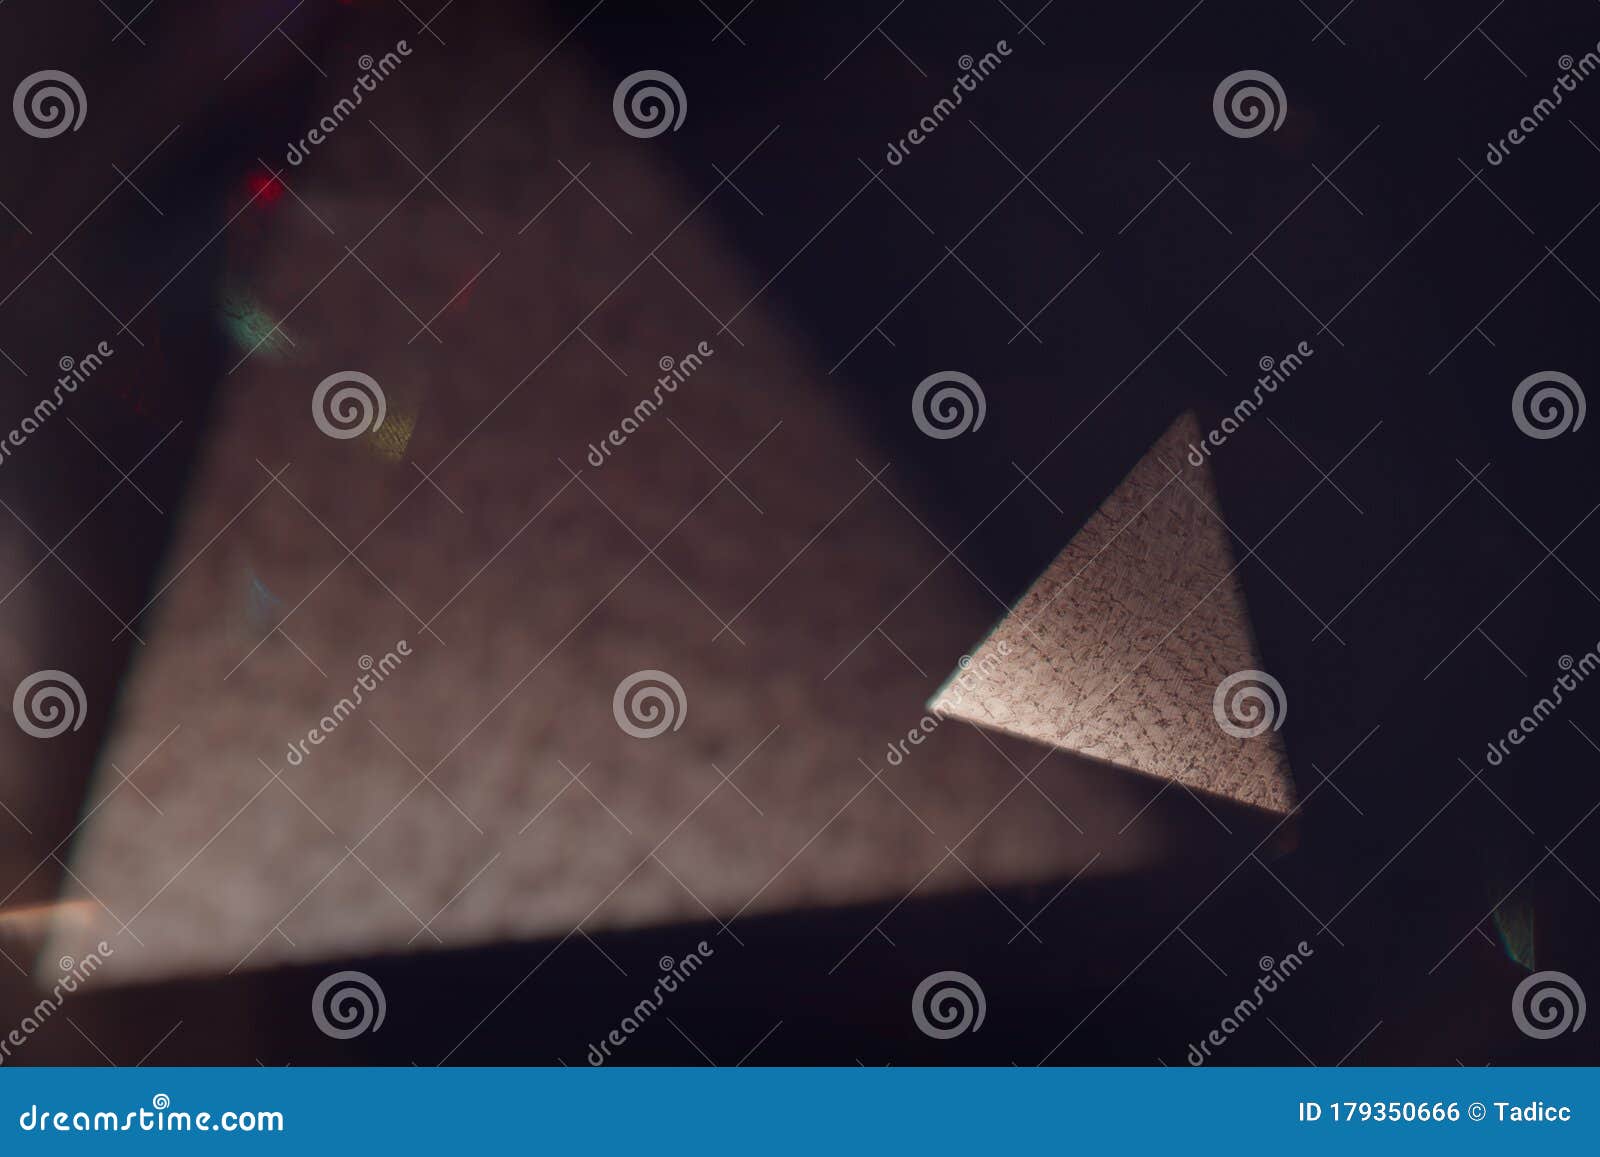 Triangle On Black Background Stock Photo - Image of pattern, backdrop